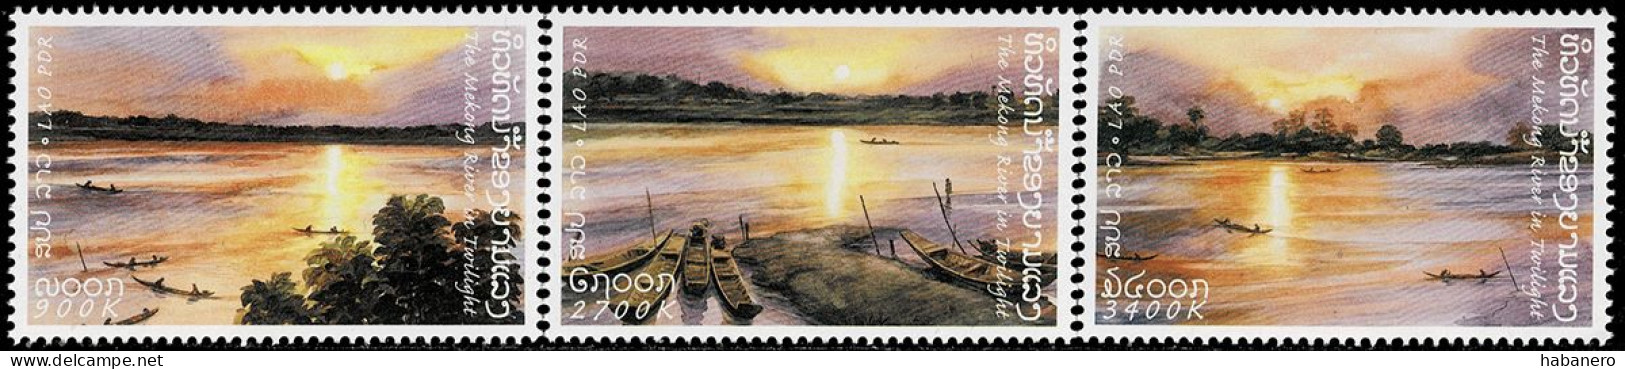 LAOS 2001 Mi 1774-1776 MEKONG RIVER MINT STAMPS ** - Laos